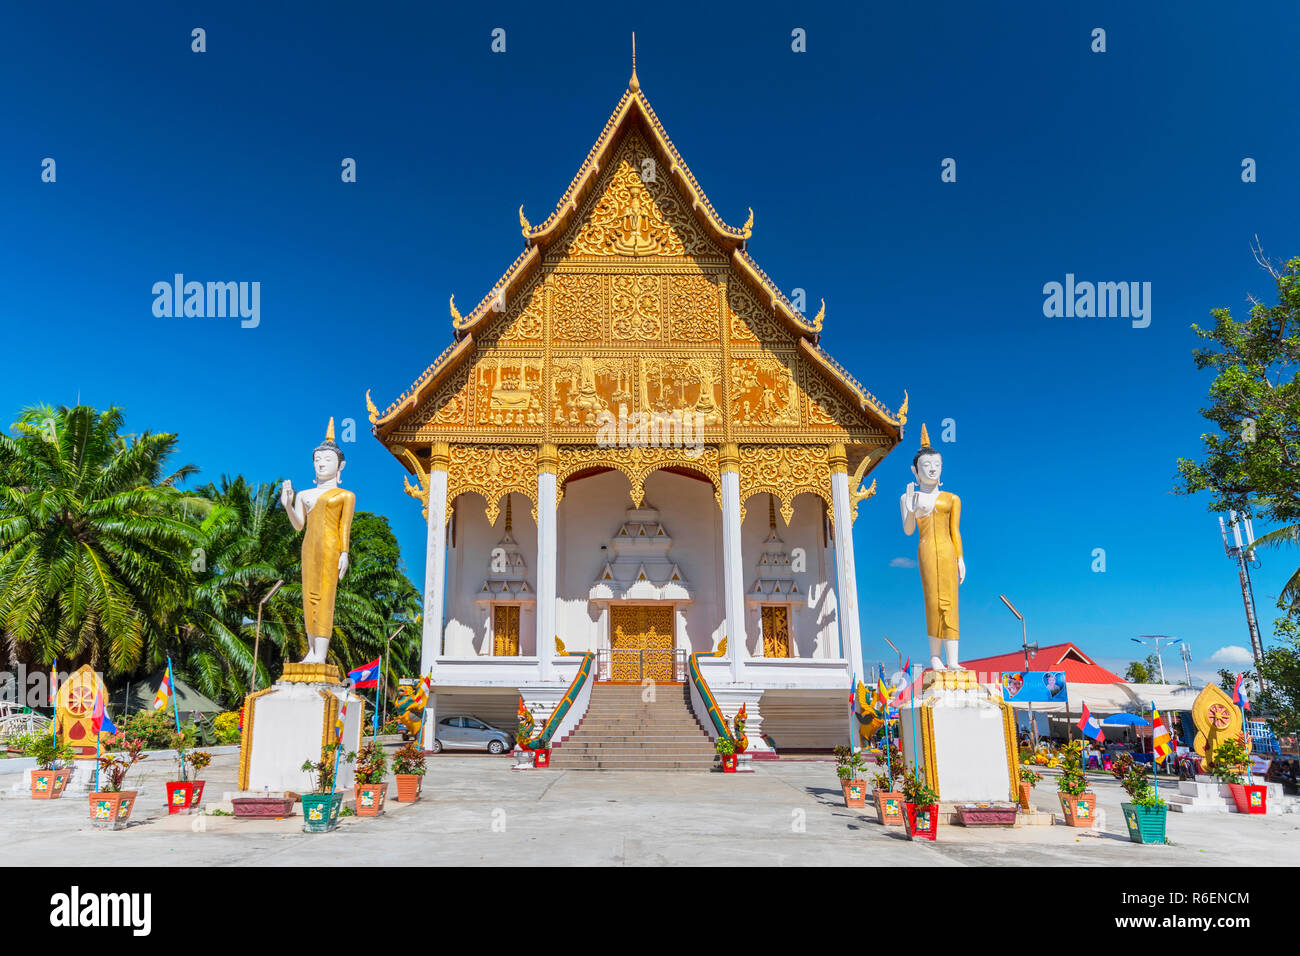 Statue di Buddha nella parte anteriore del Wat That Luang Neua tempio, Vientiane, Laos, Indocina, Asia Foto Stock